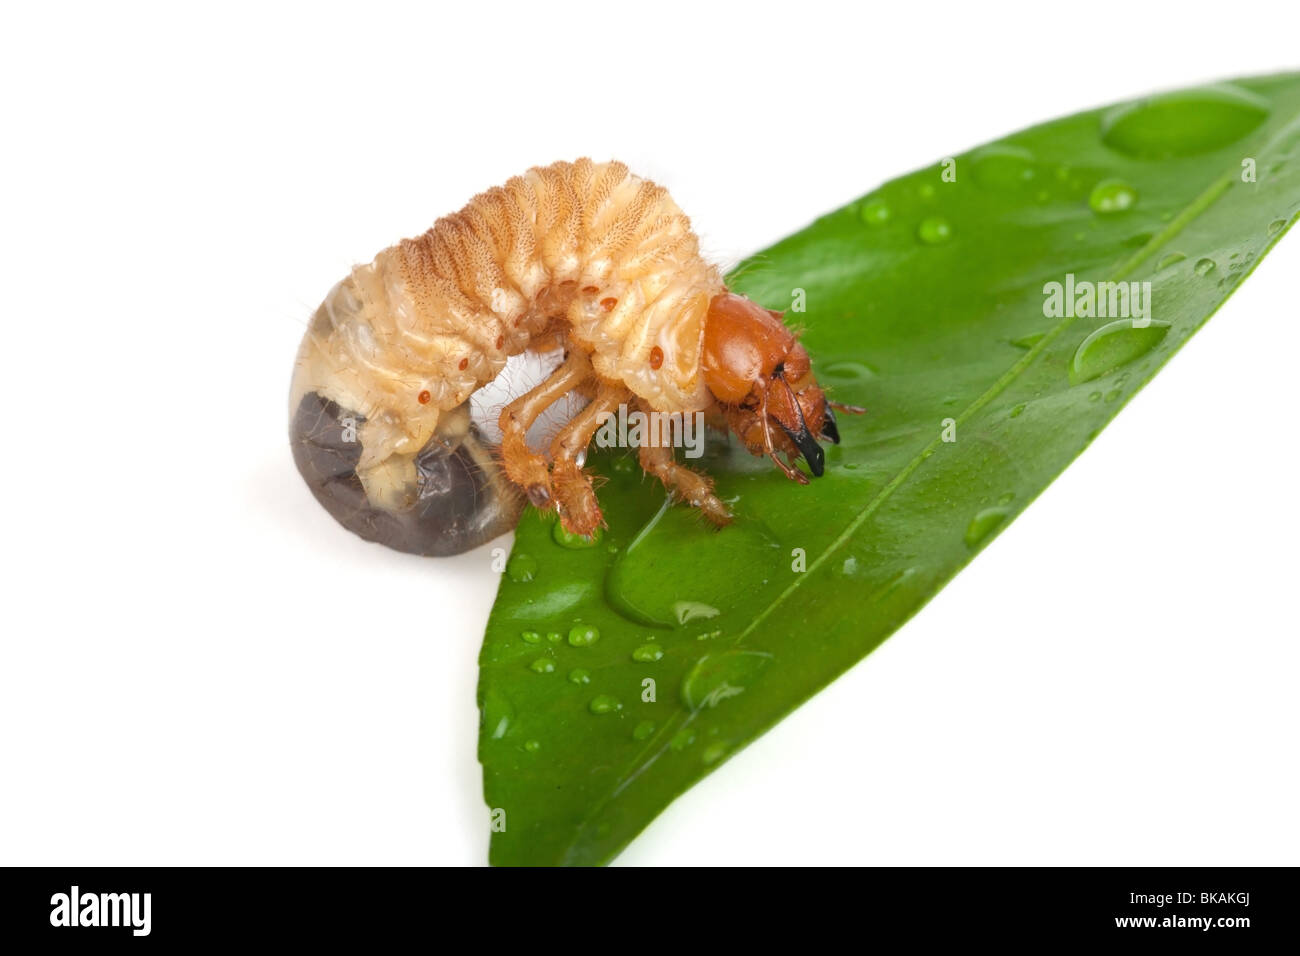 Chafer larva on green leaf Stock Photo